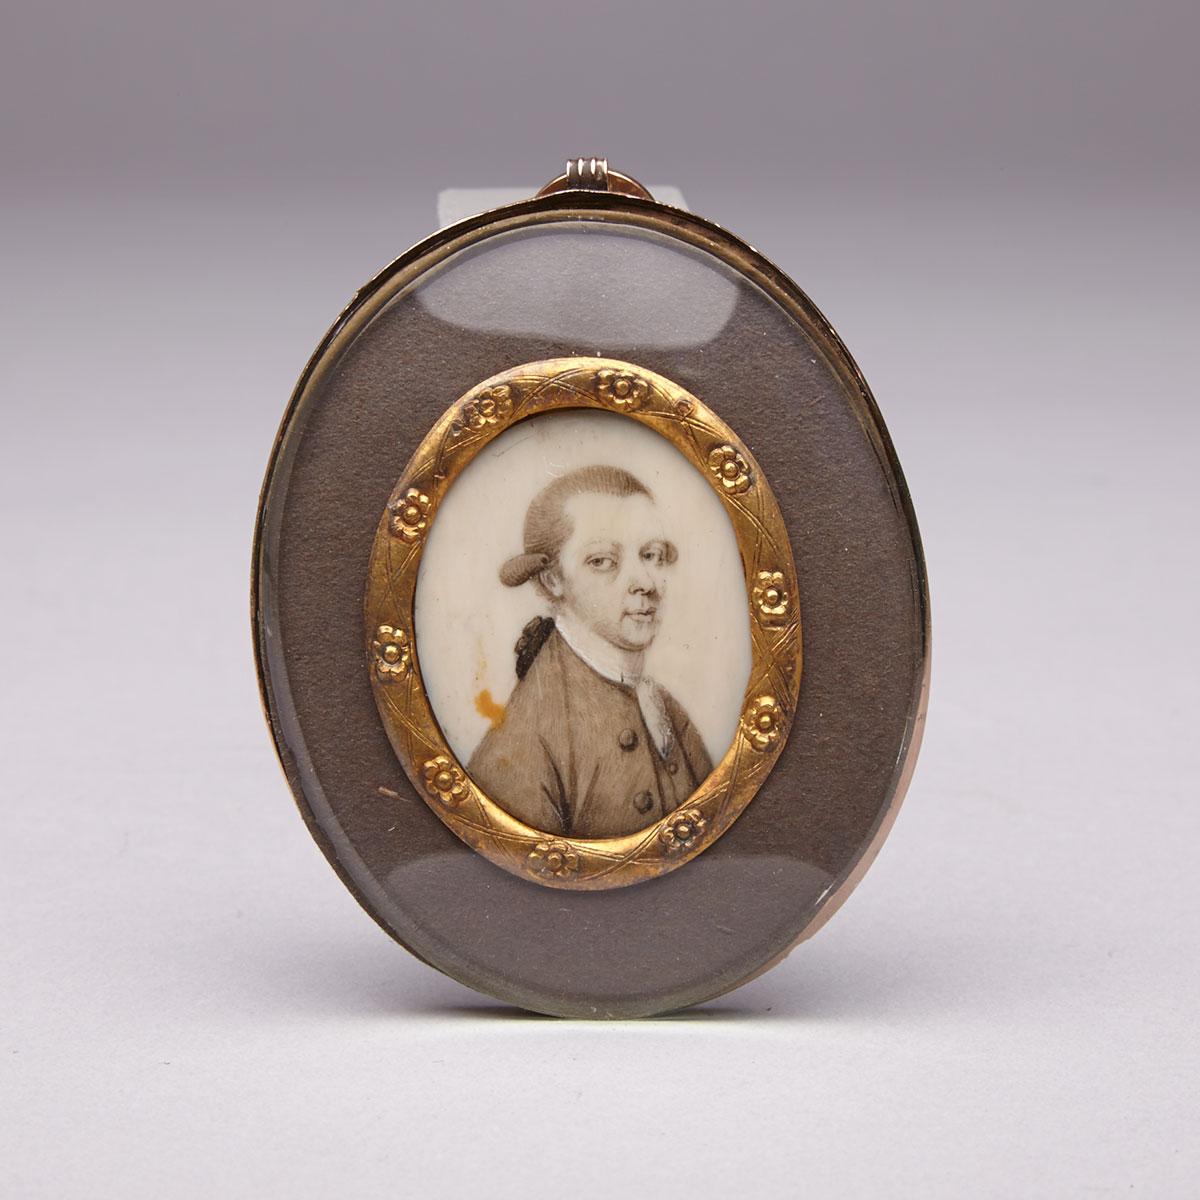 Manner of James Ferguson Portrait Miniature on Ivory, mid 18th century